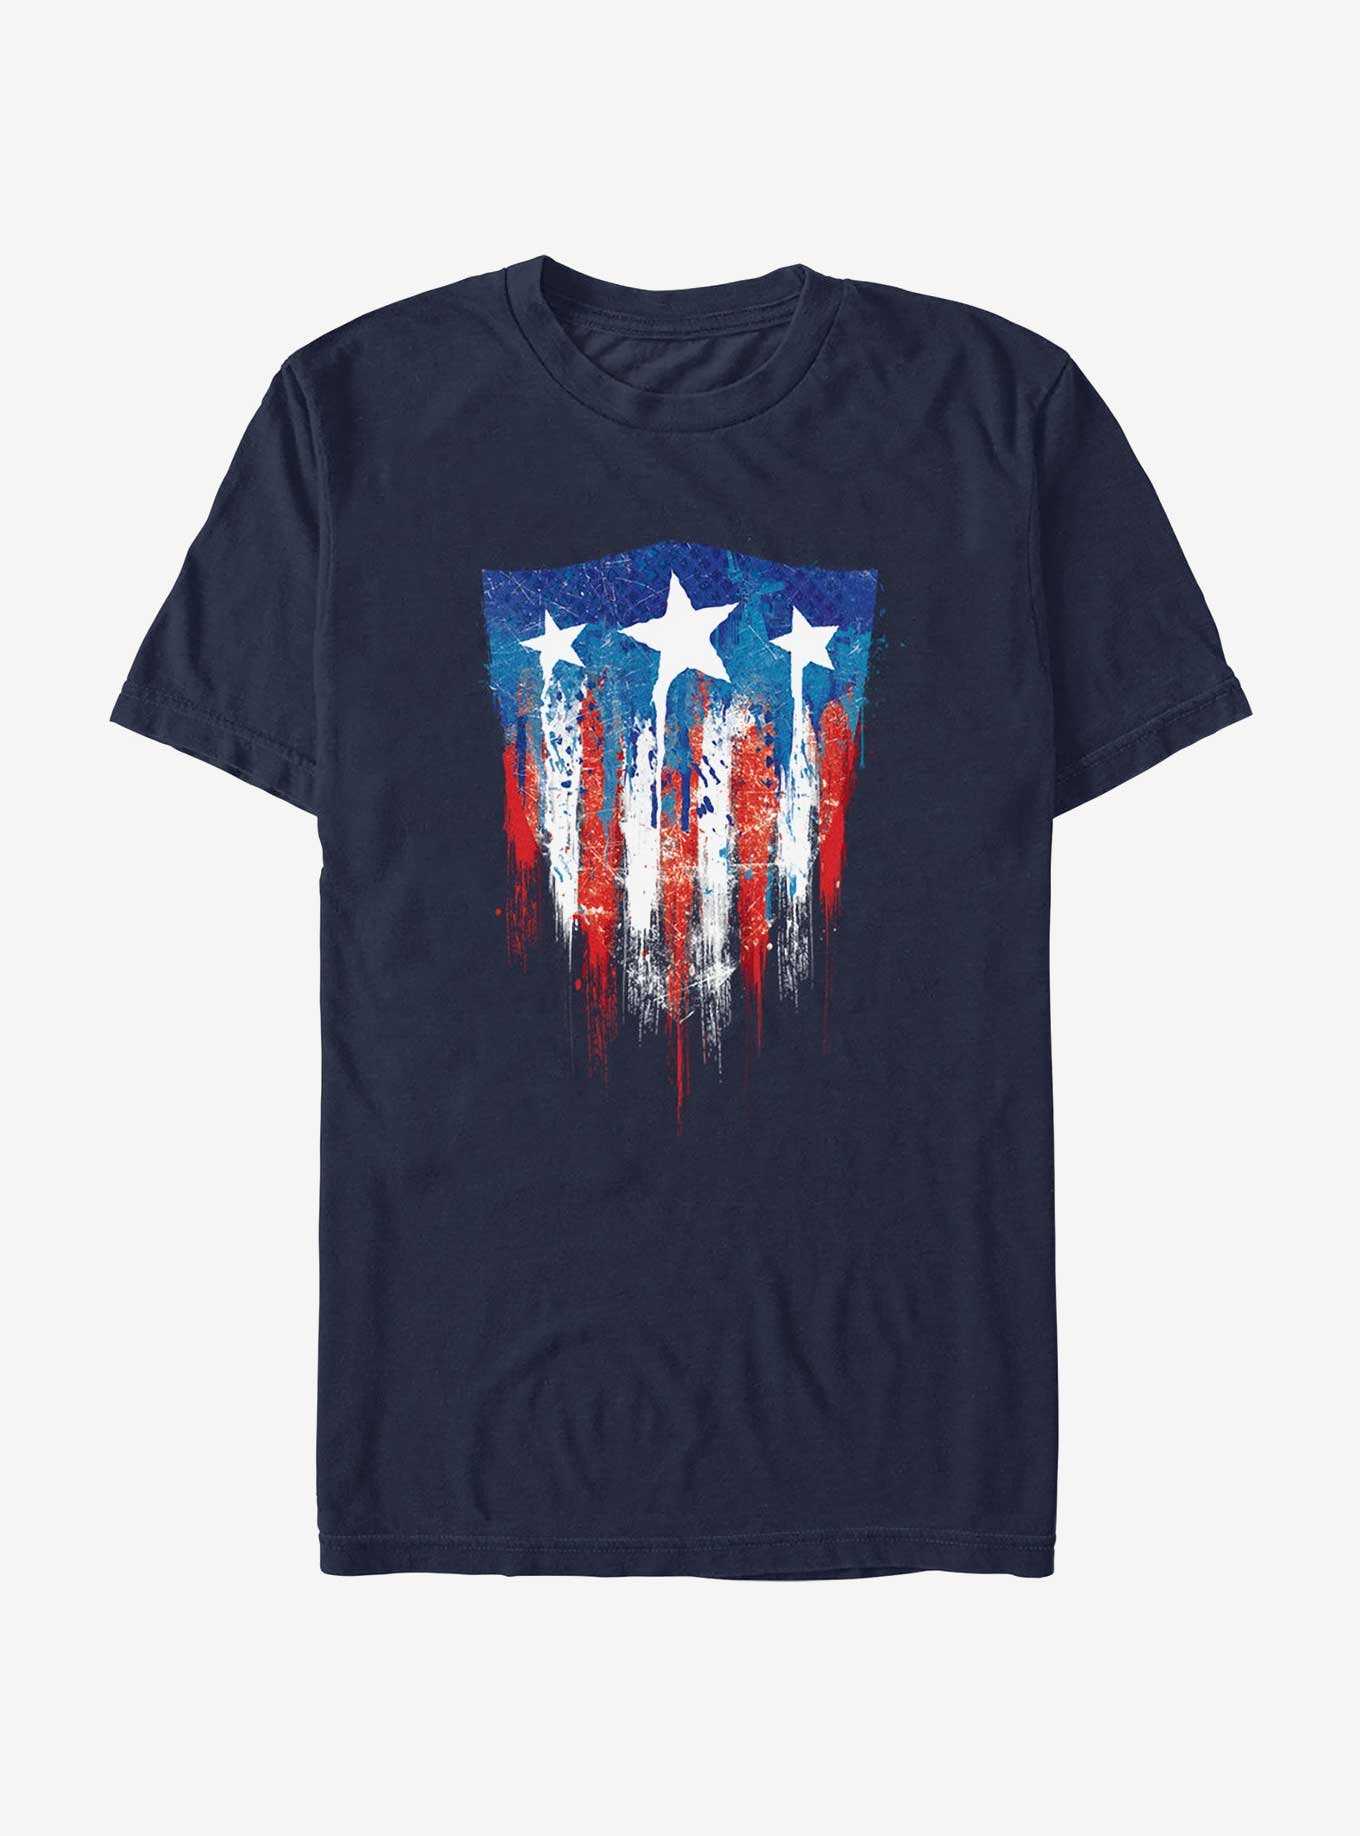 Marvel Captain America Dripping Cap T-Shirt, , hi-res